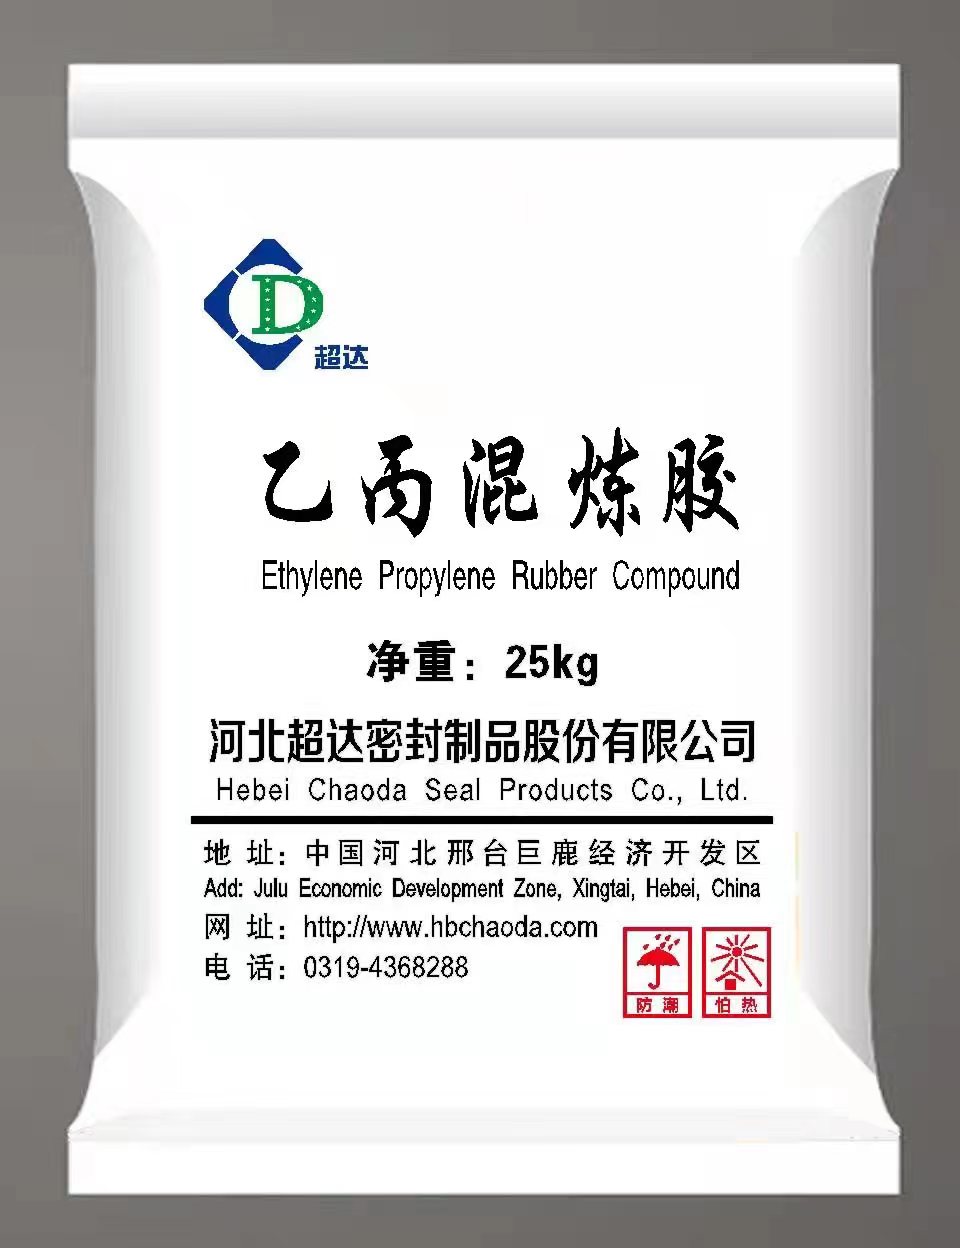 Ethylene propylene rubber compound